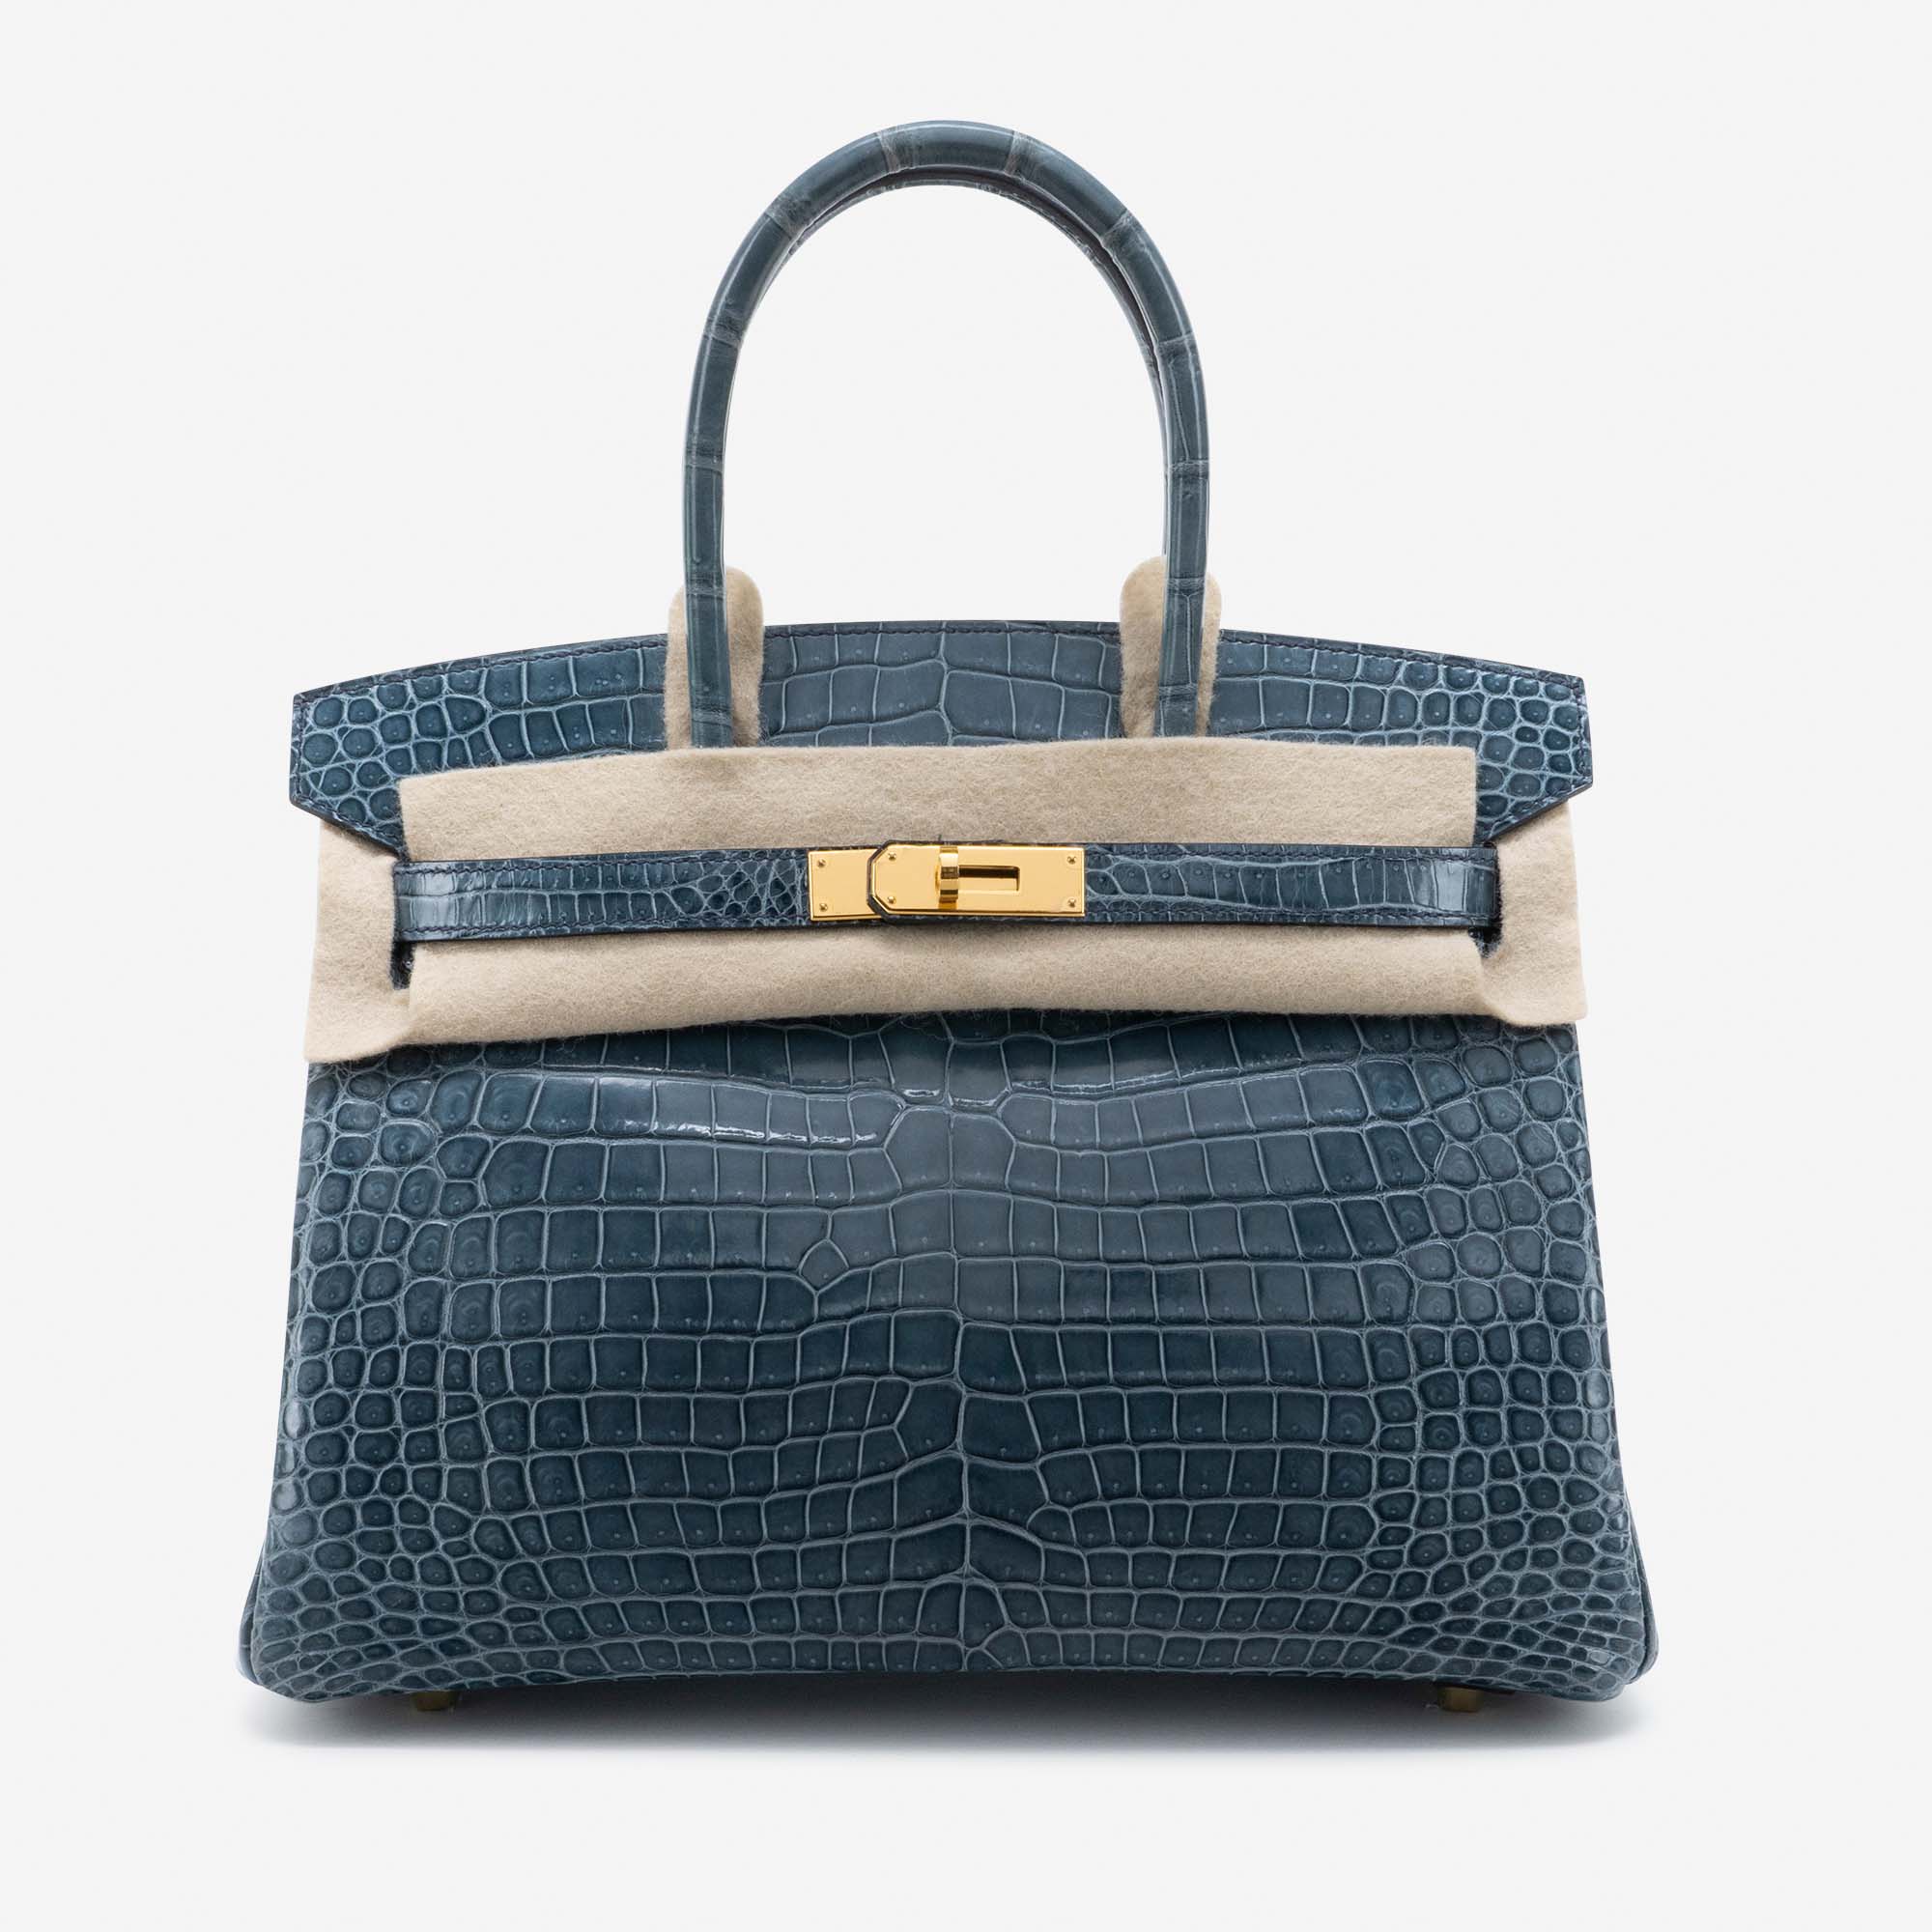 Hermes Birkin 30 Handbag N7 Blue Tempete Shiny Porosus Croc SHW